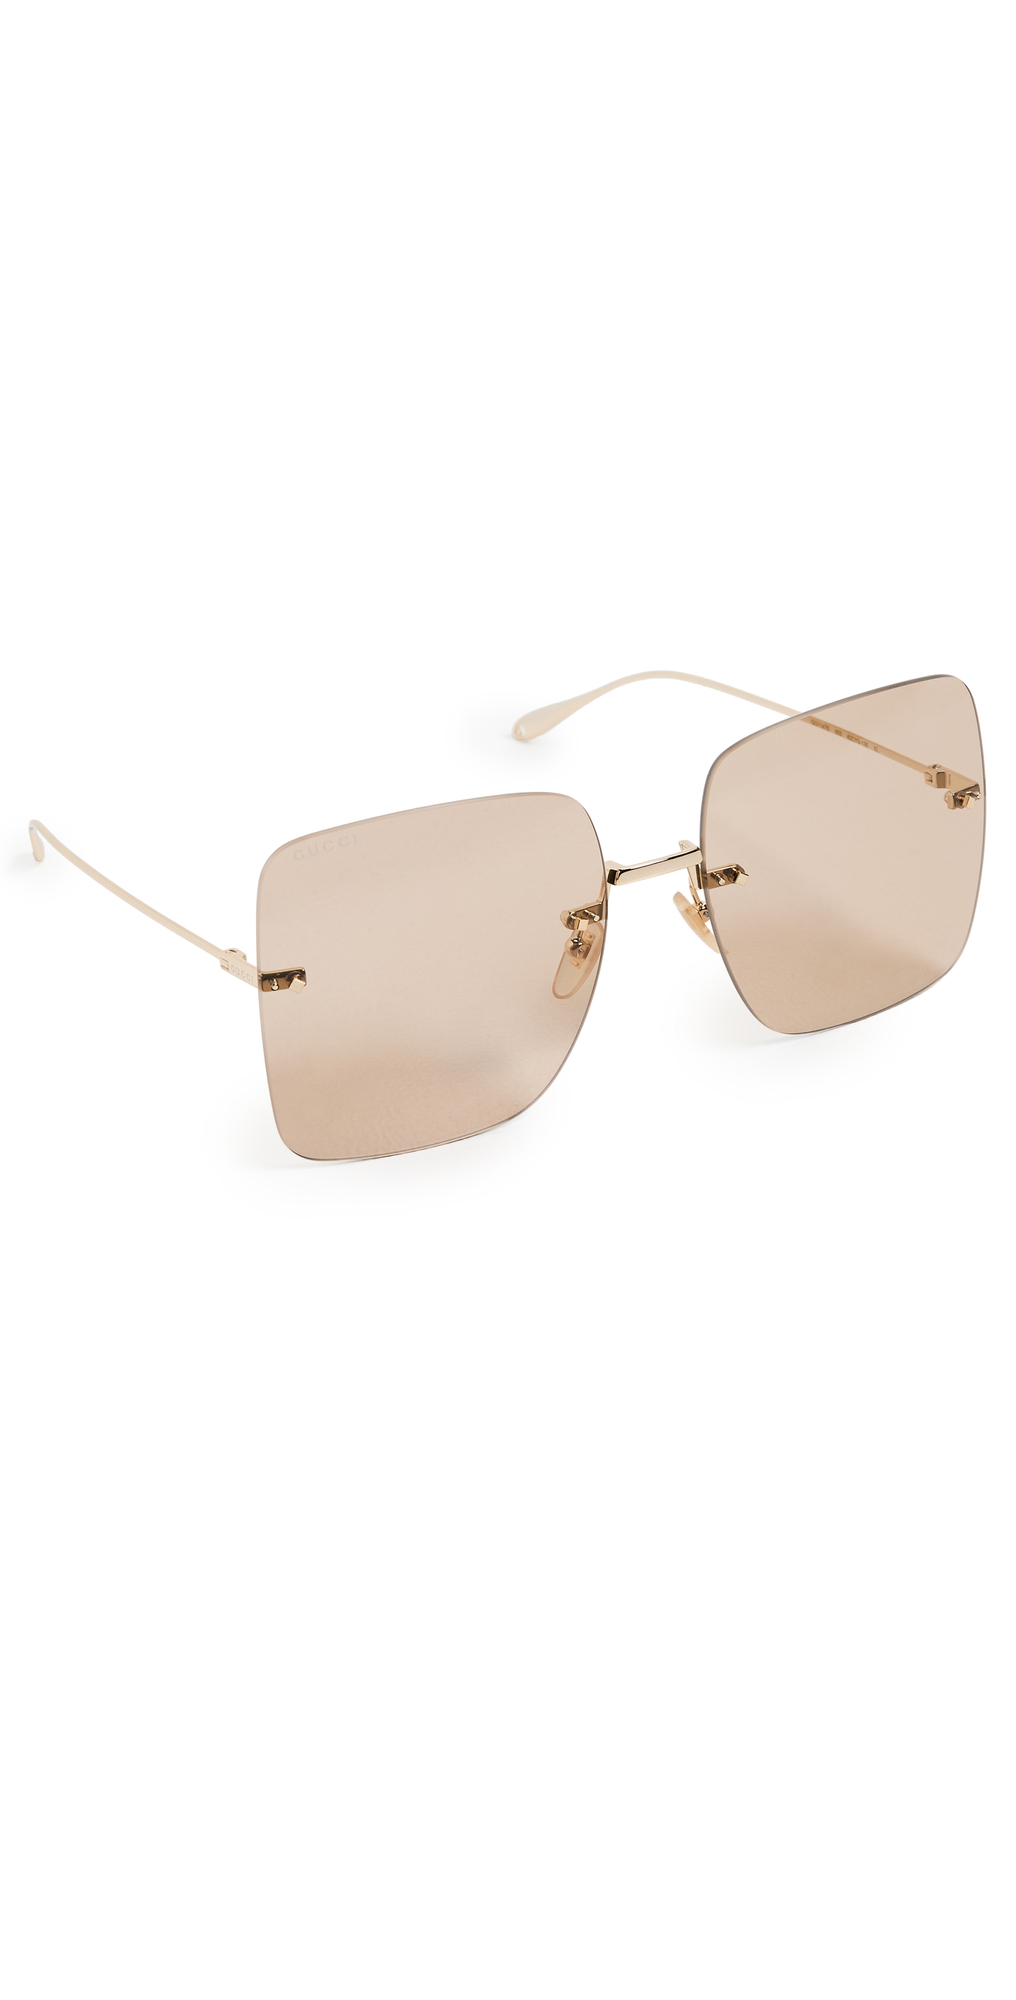 Gucci Pure Metal Sunglasses in brown / gold